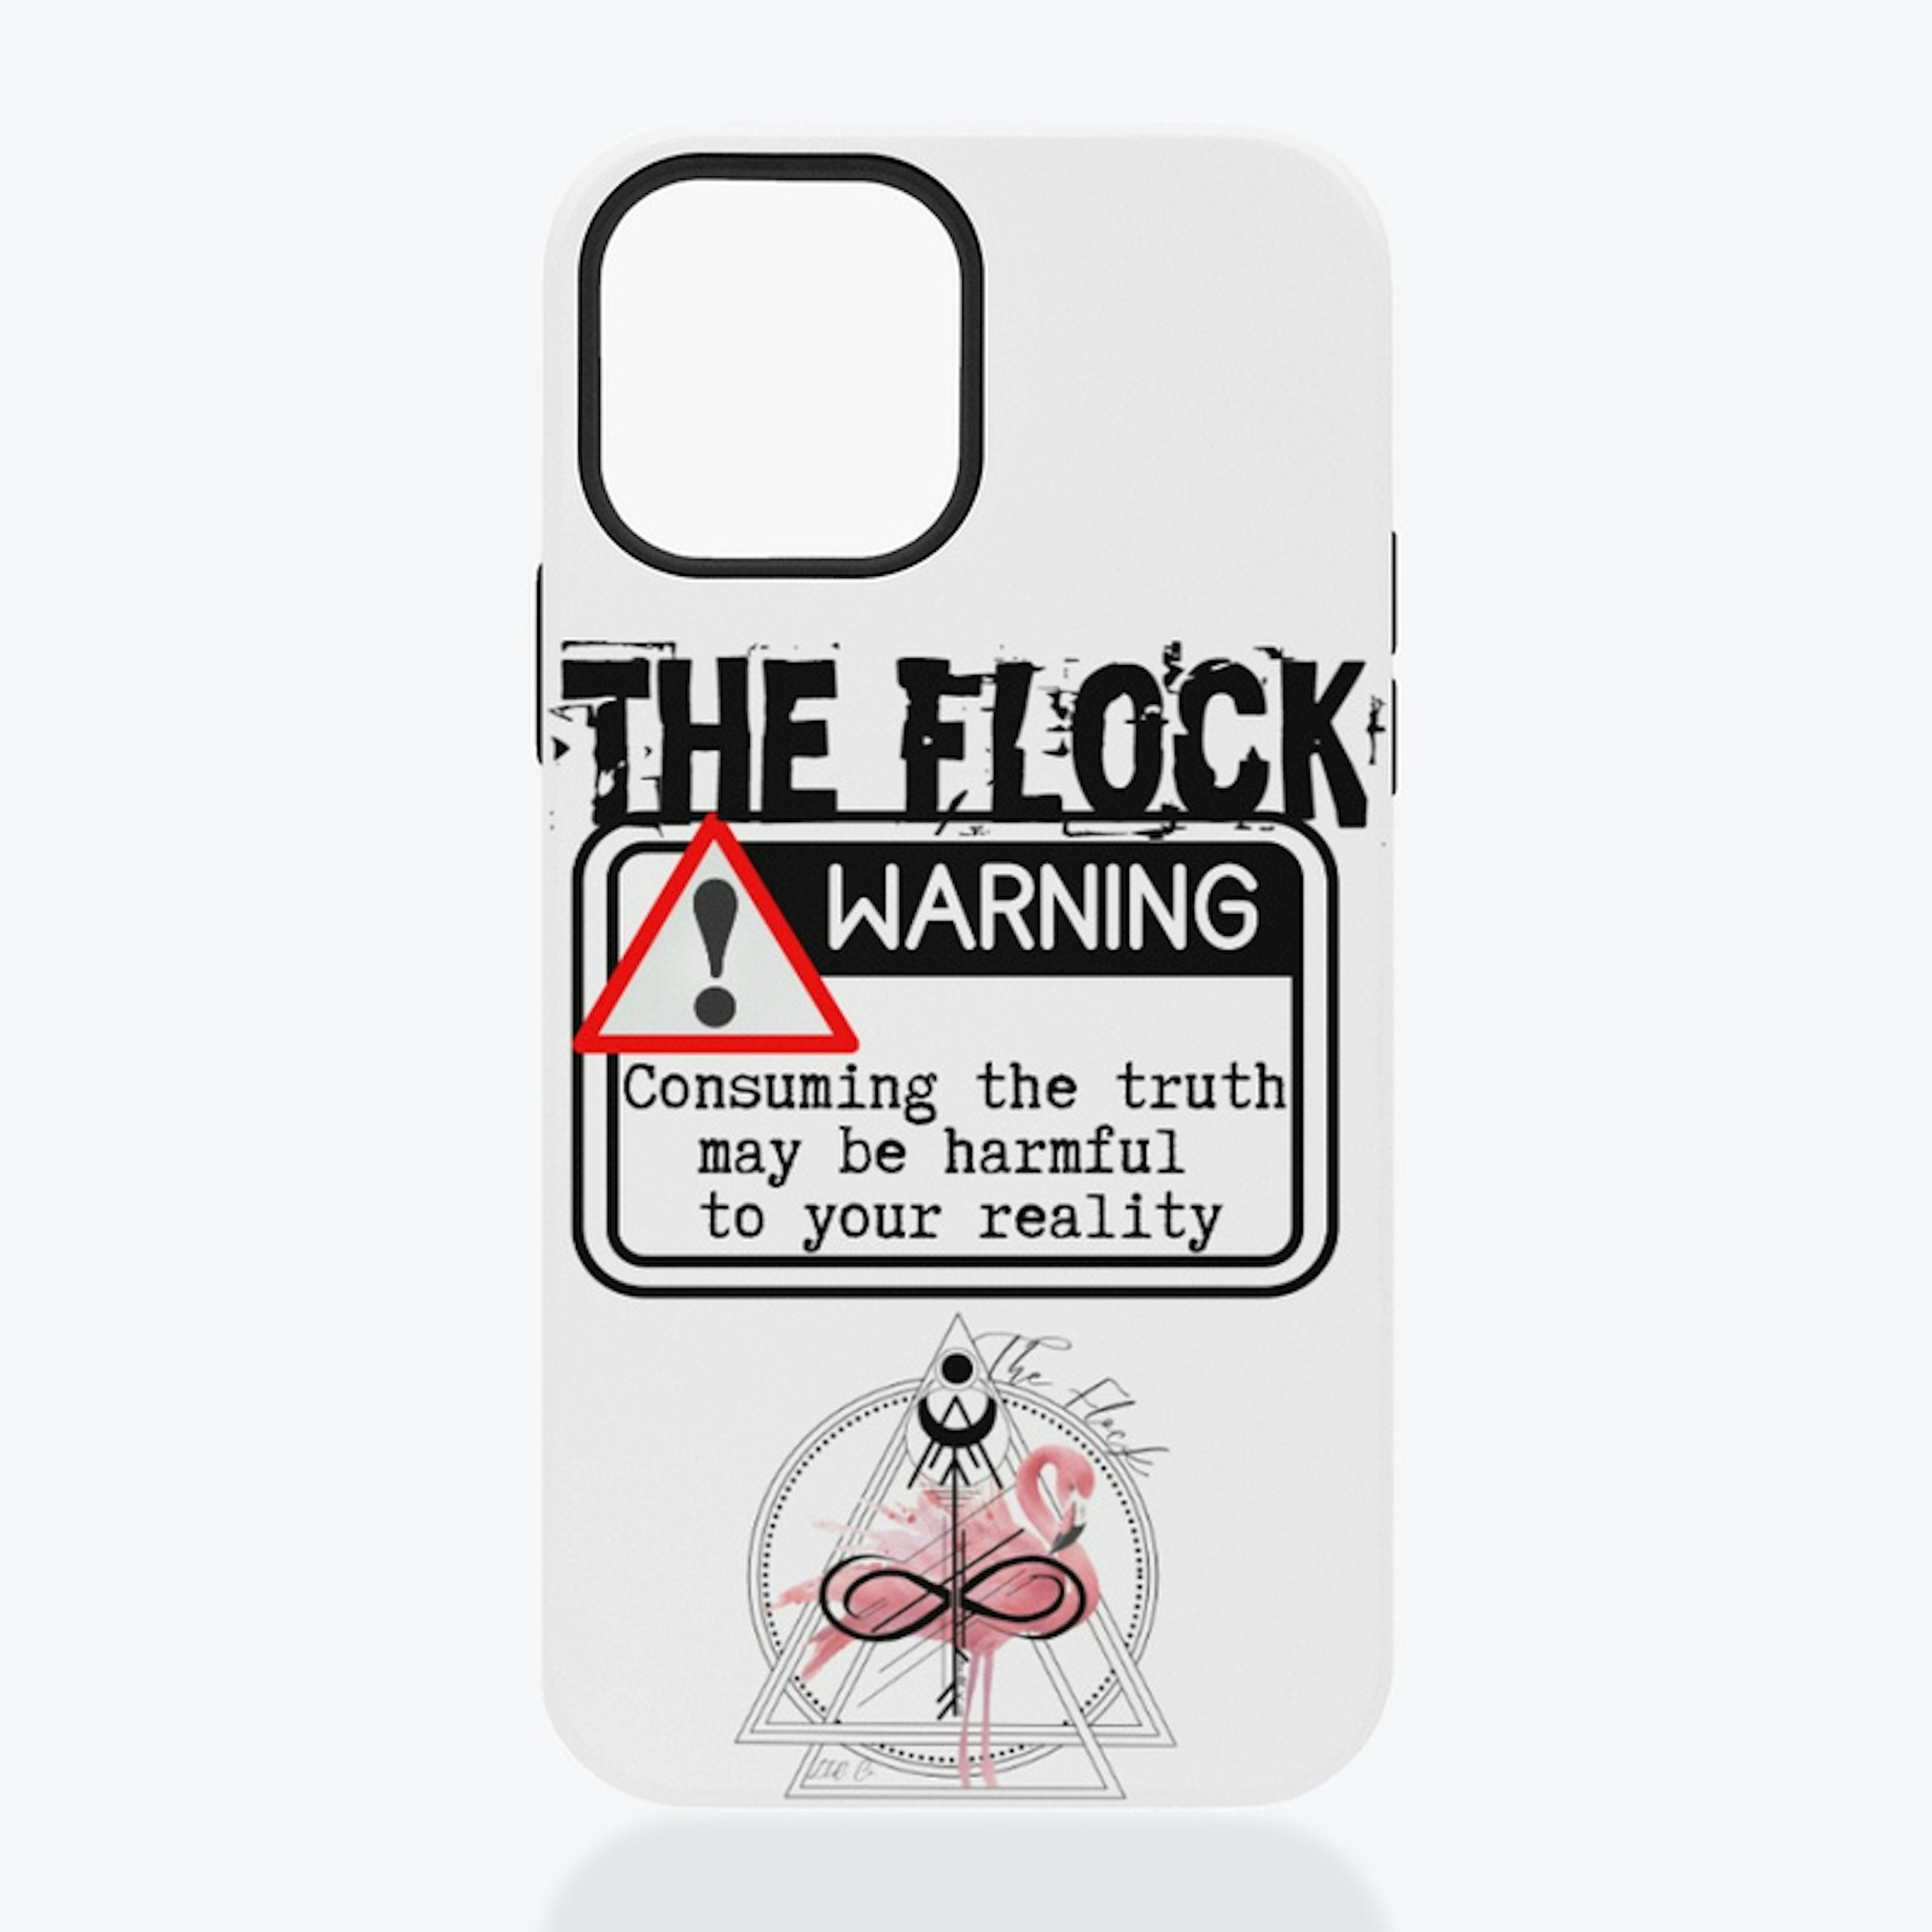 Flock Warning!